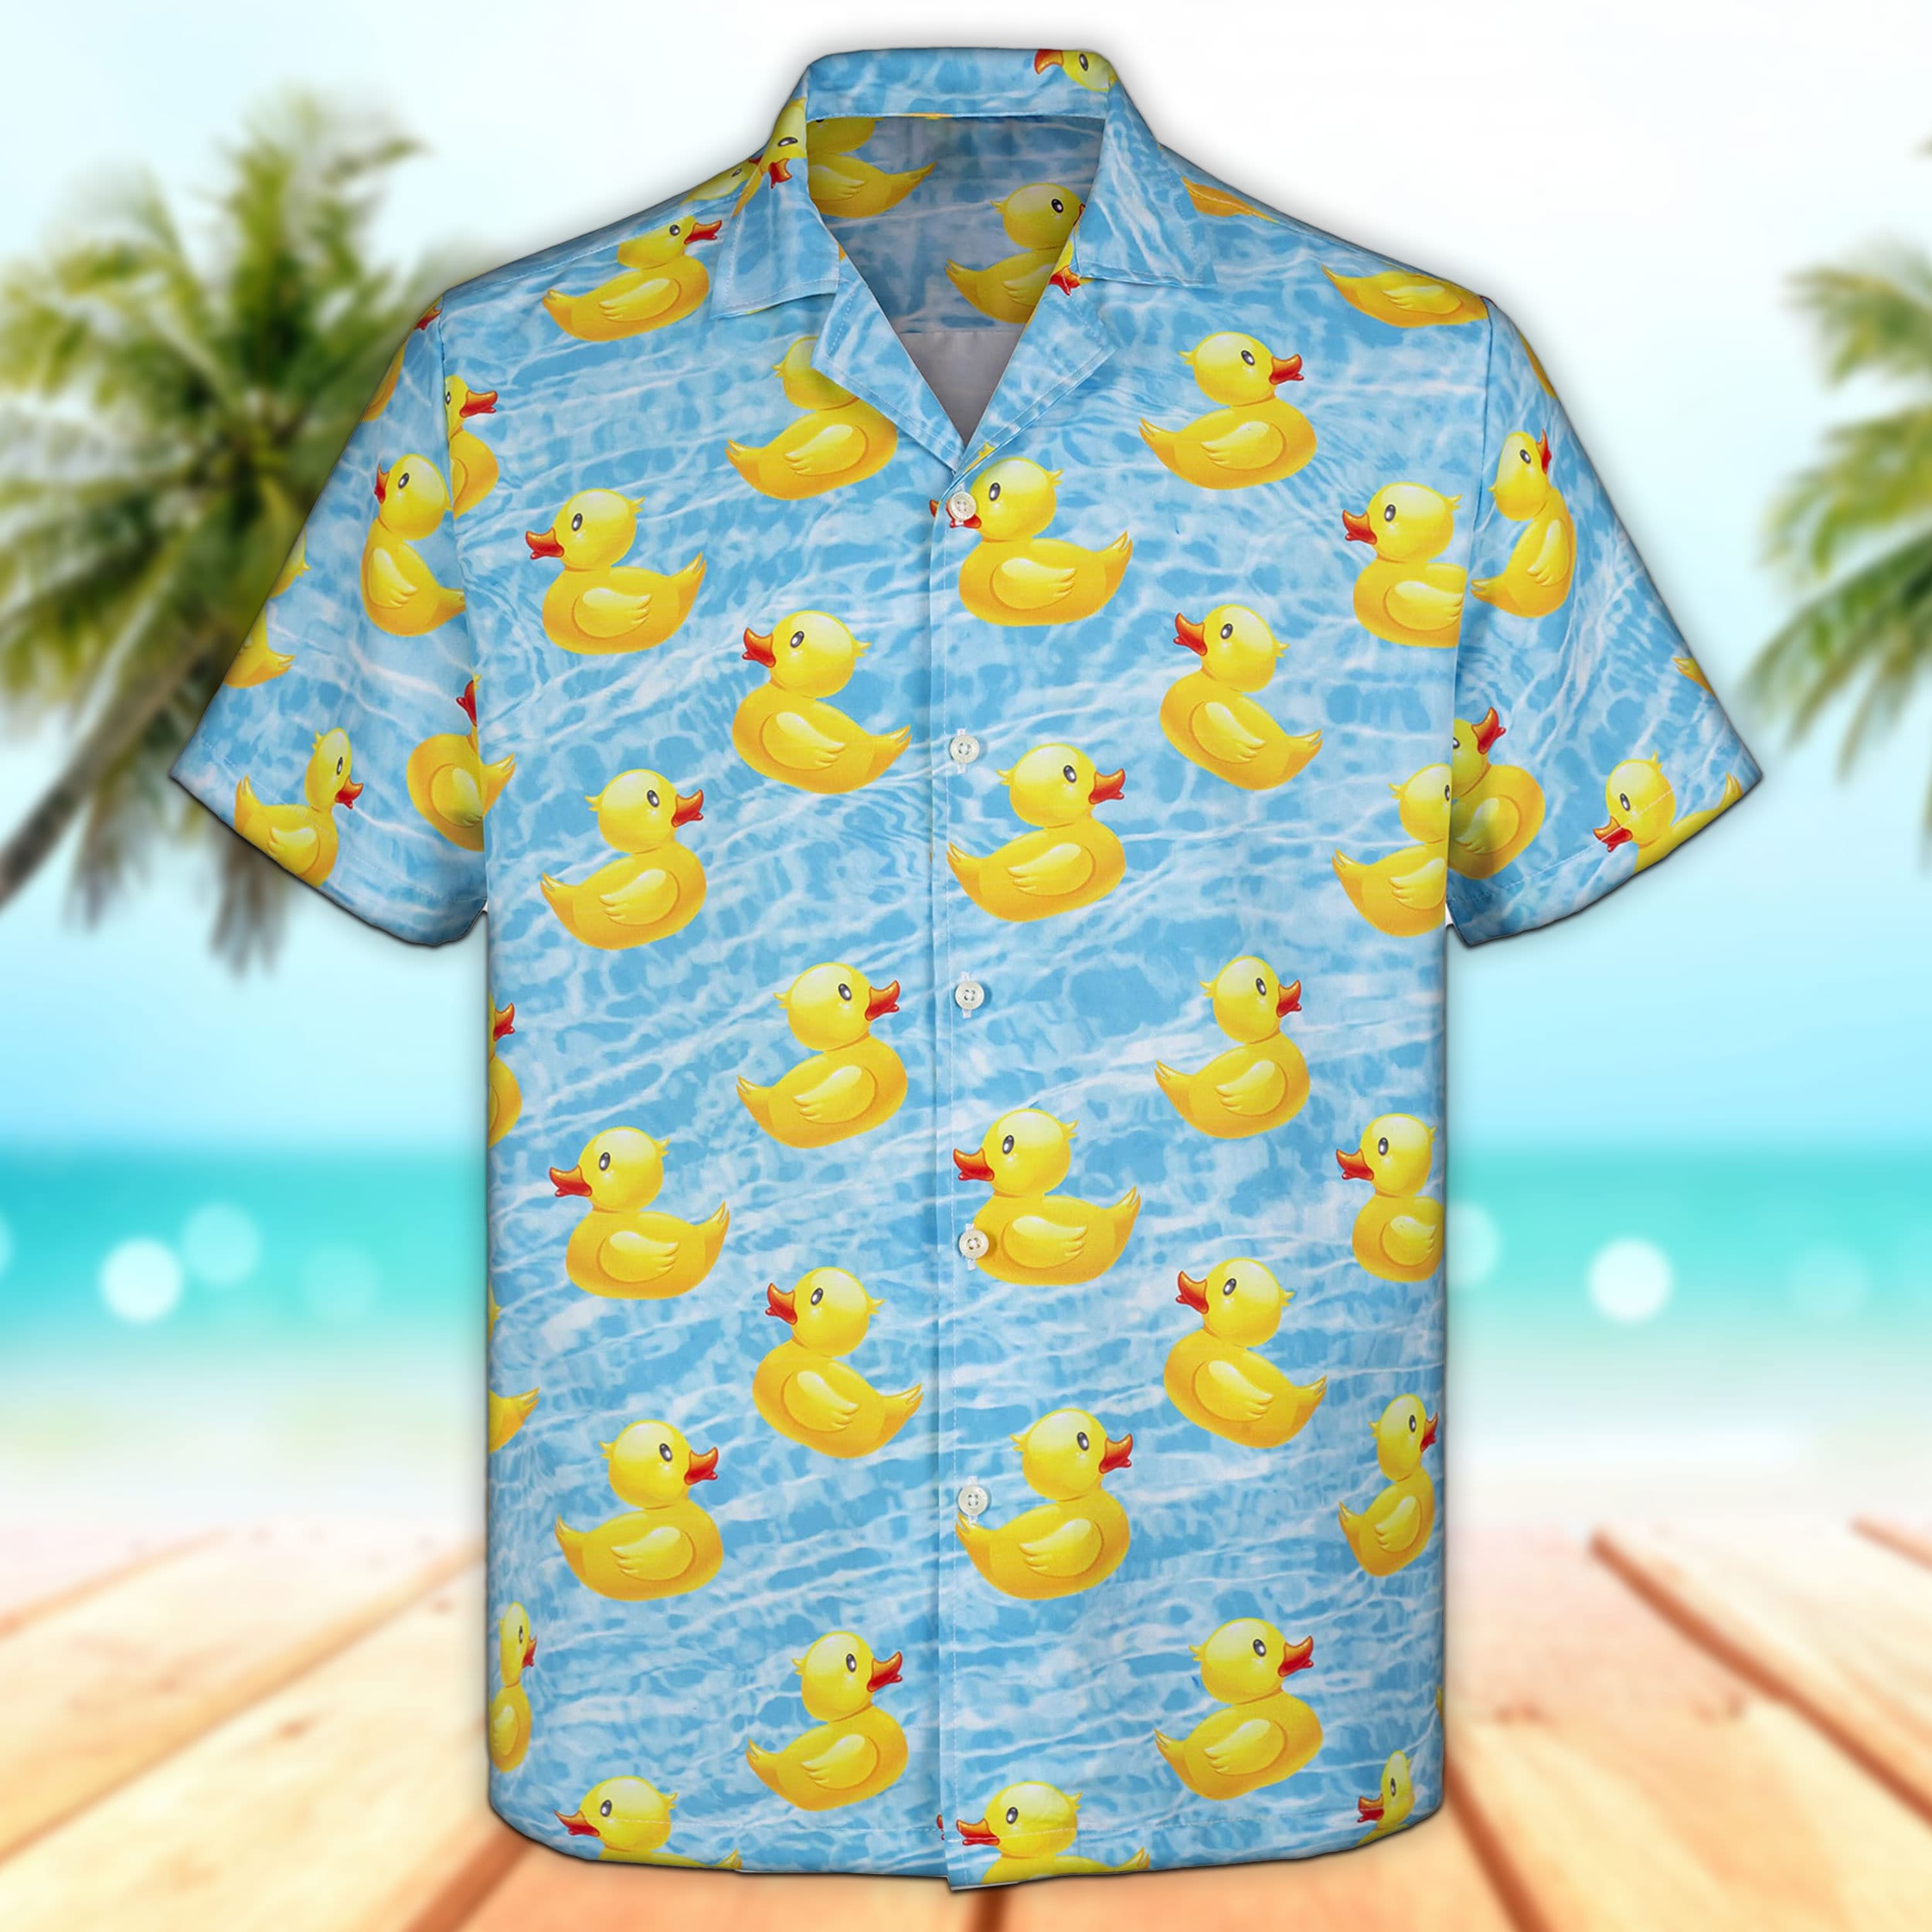 Yellow Duck T-Shirt